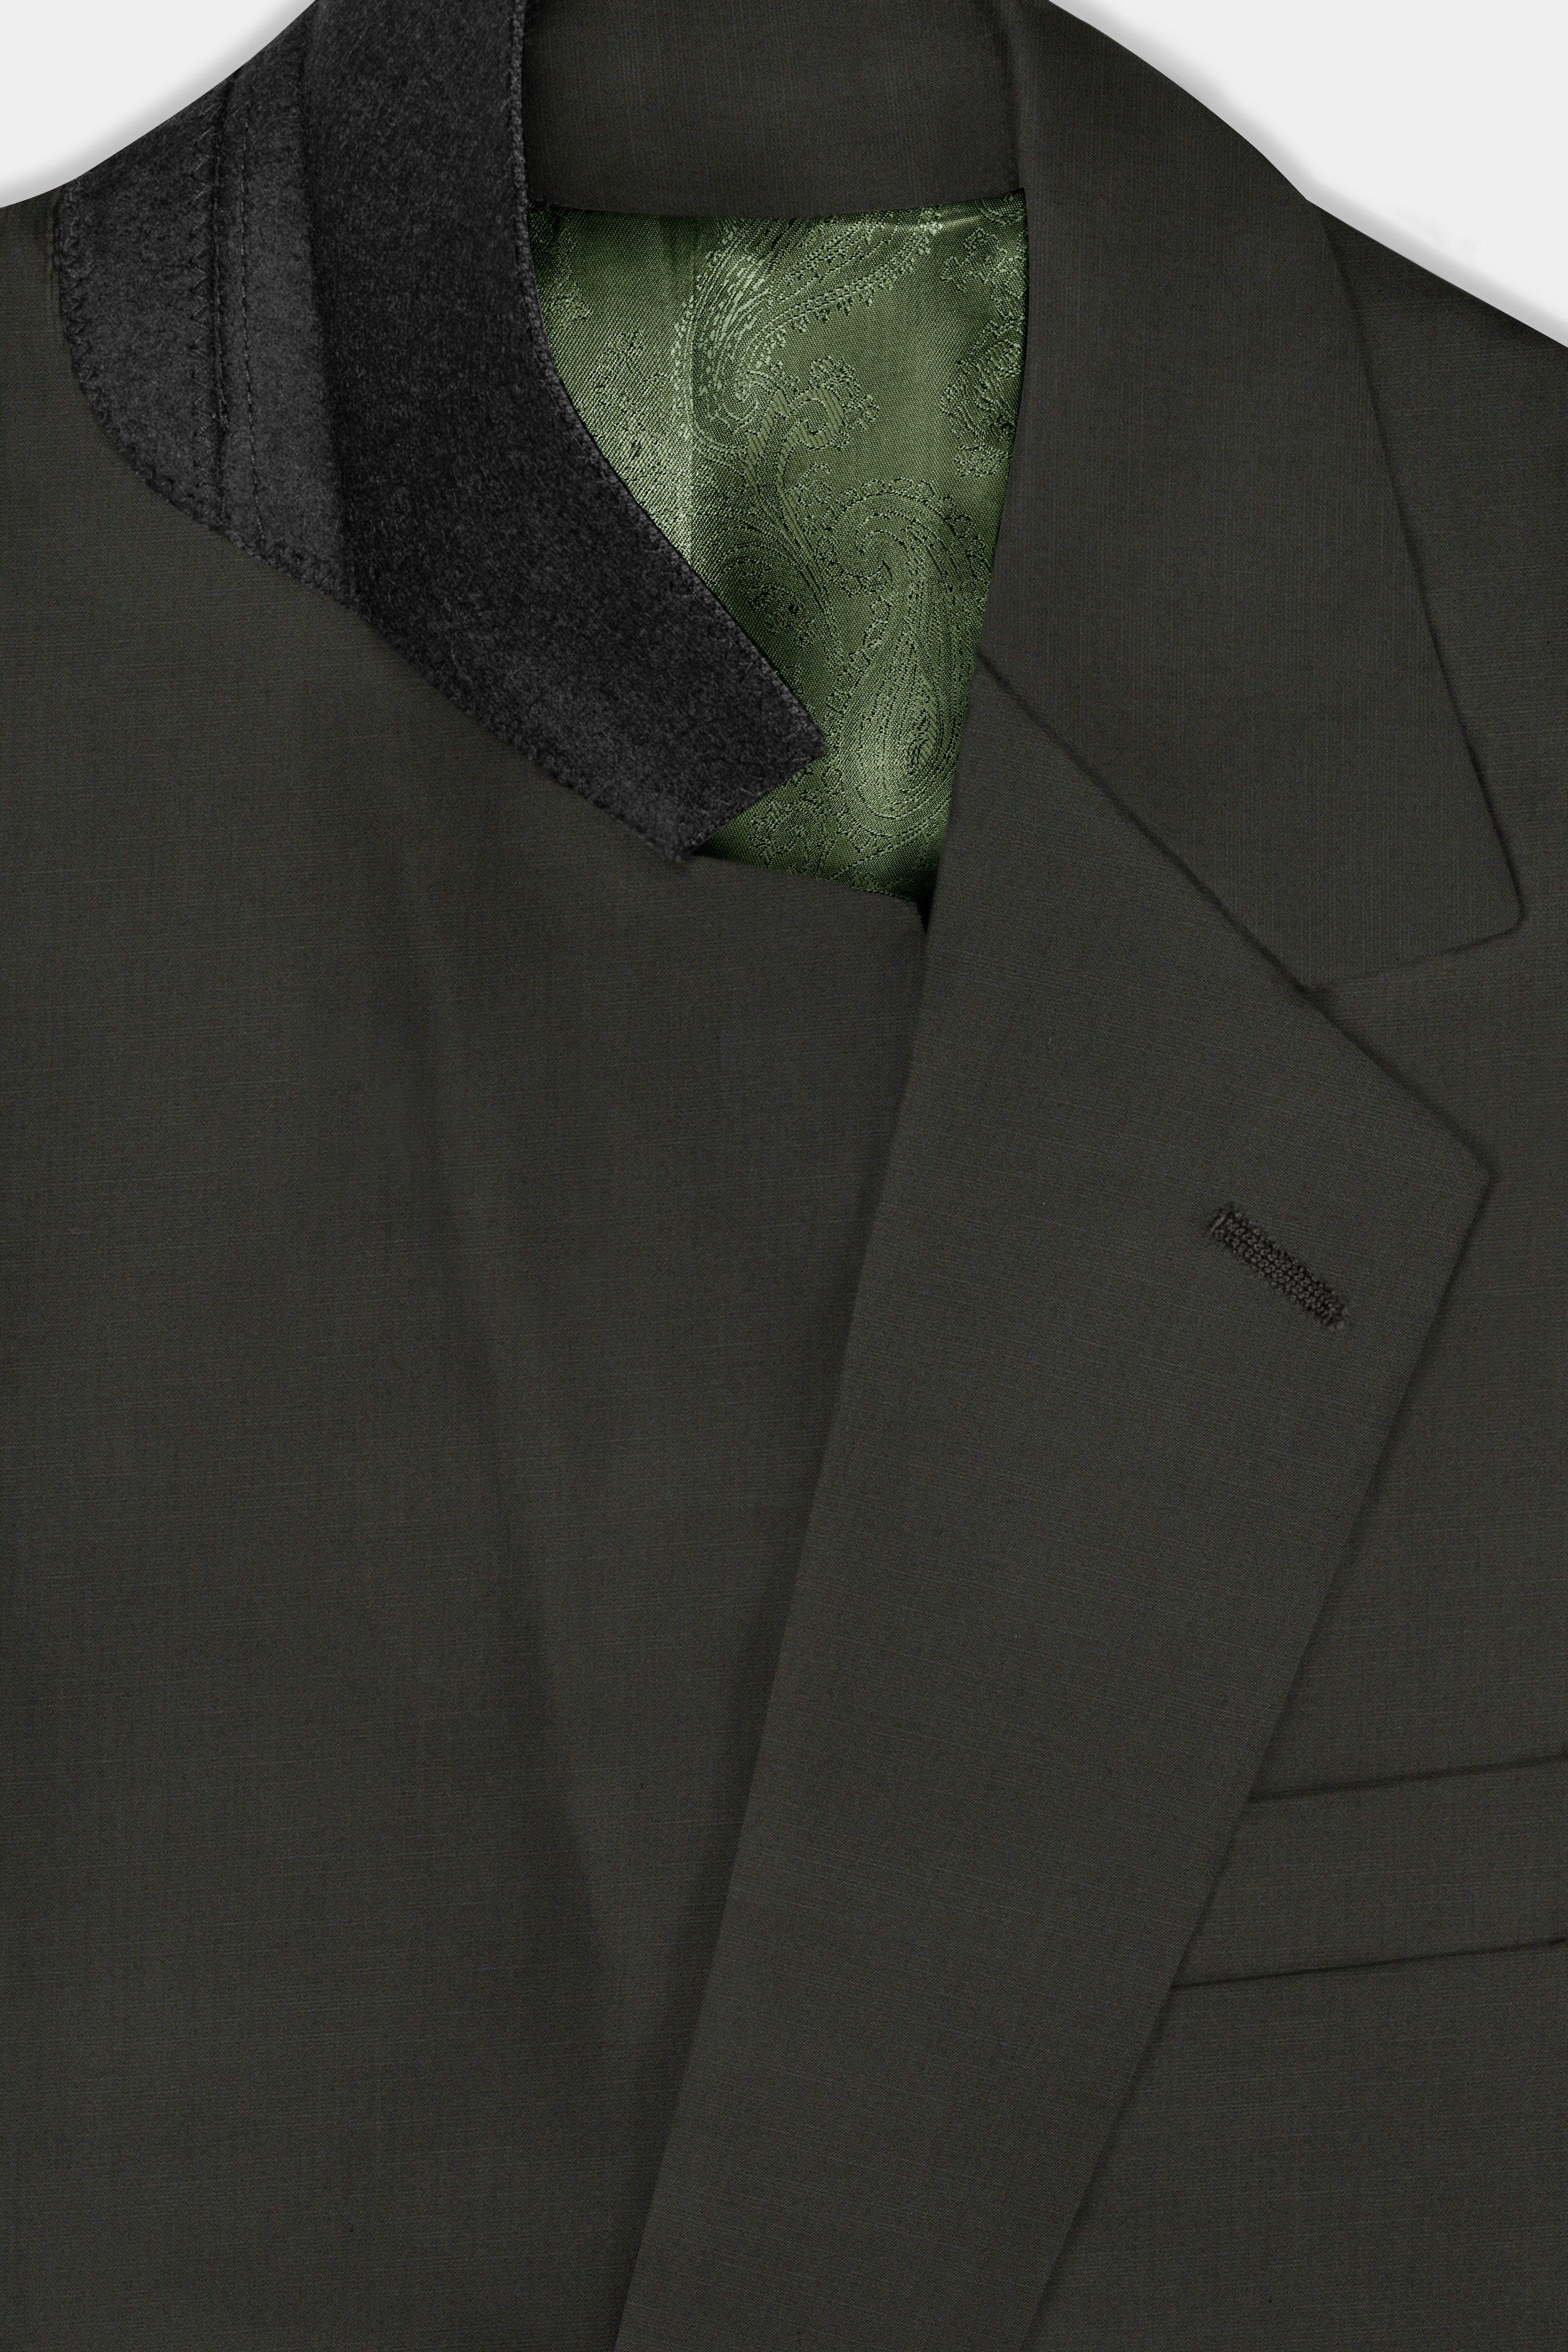 Rangoon Green Wool Blend Single Breasted Suit